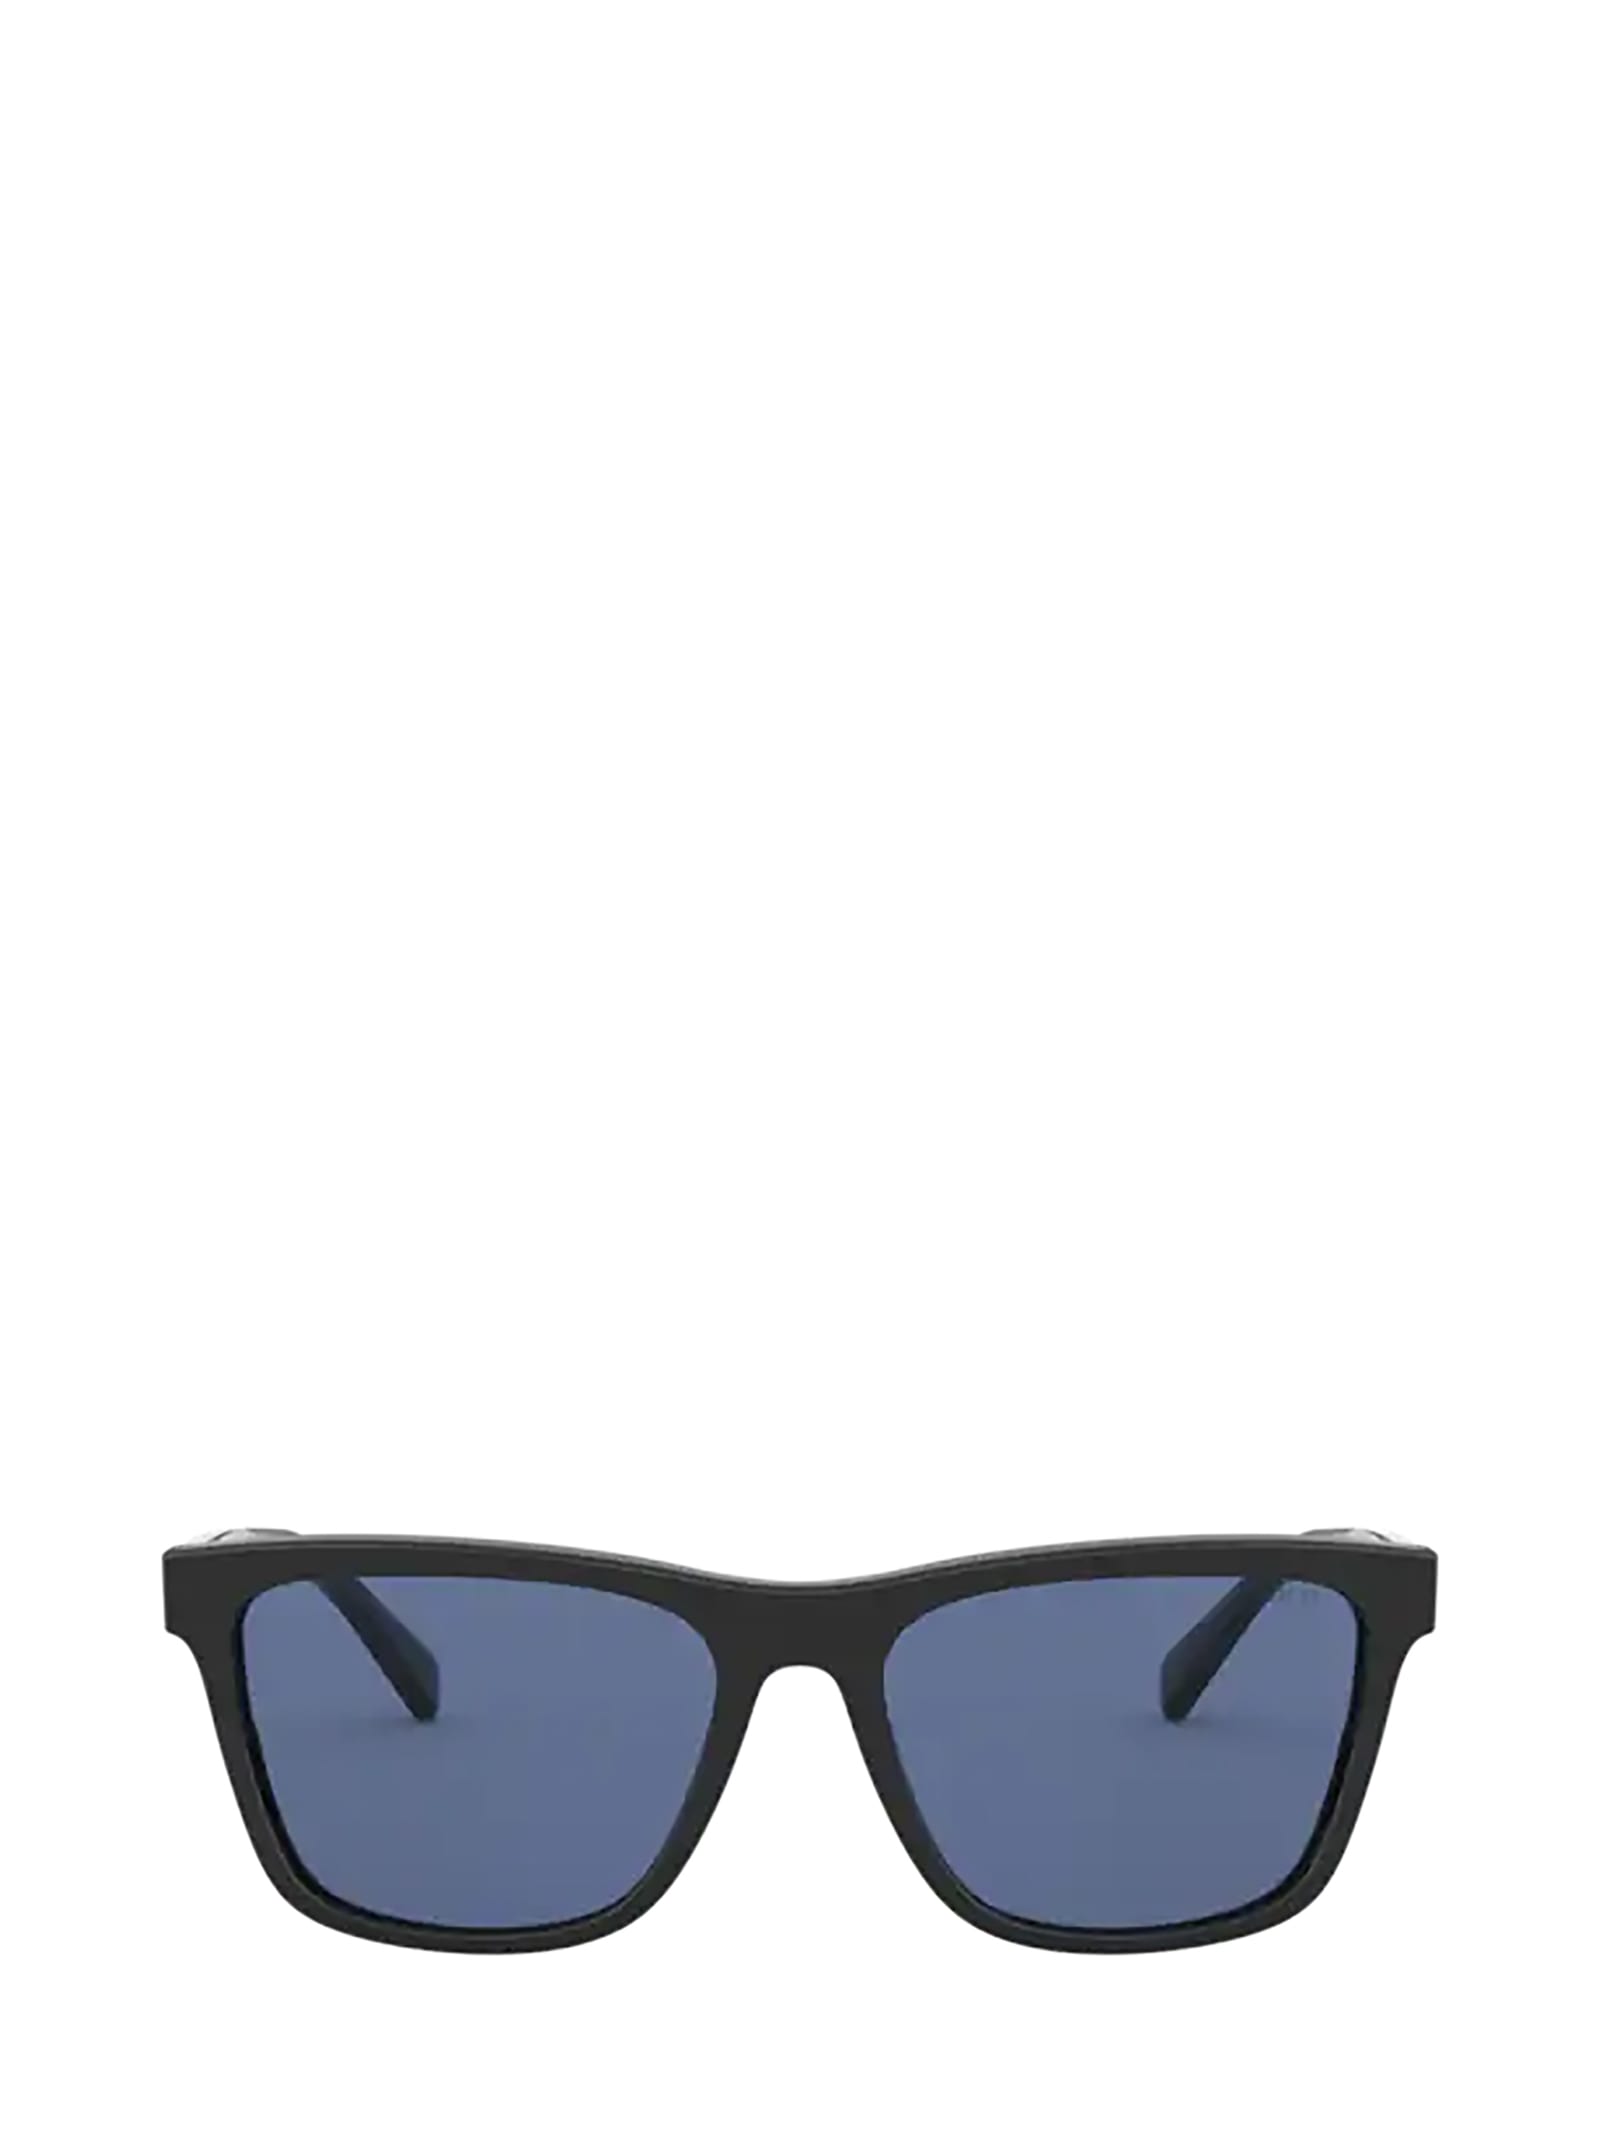 Ph4167 Shiny Black Sunglasses